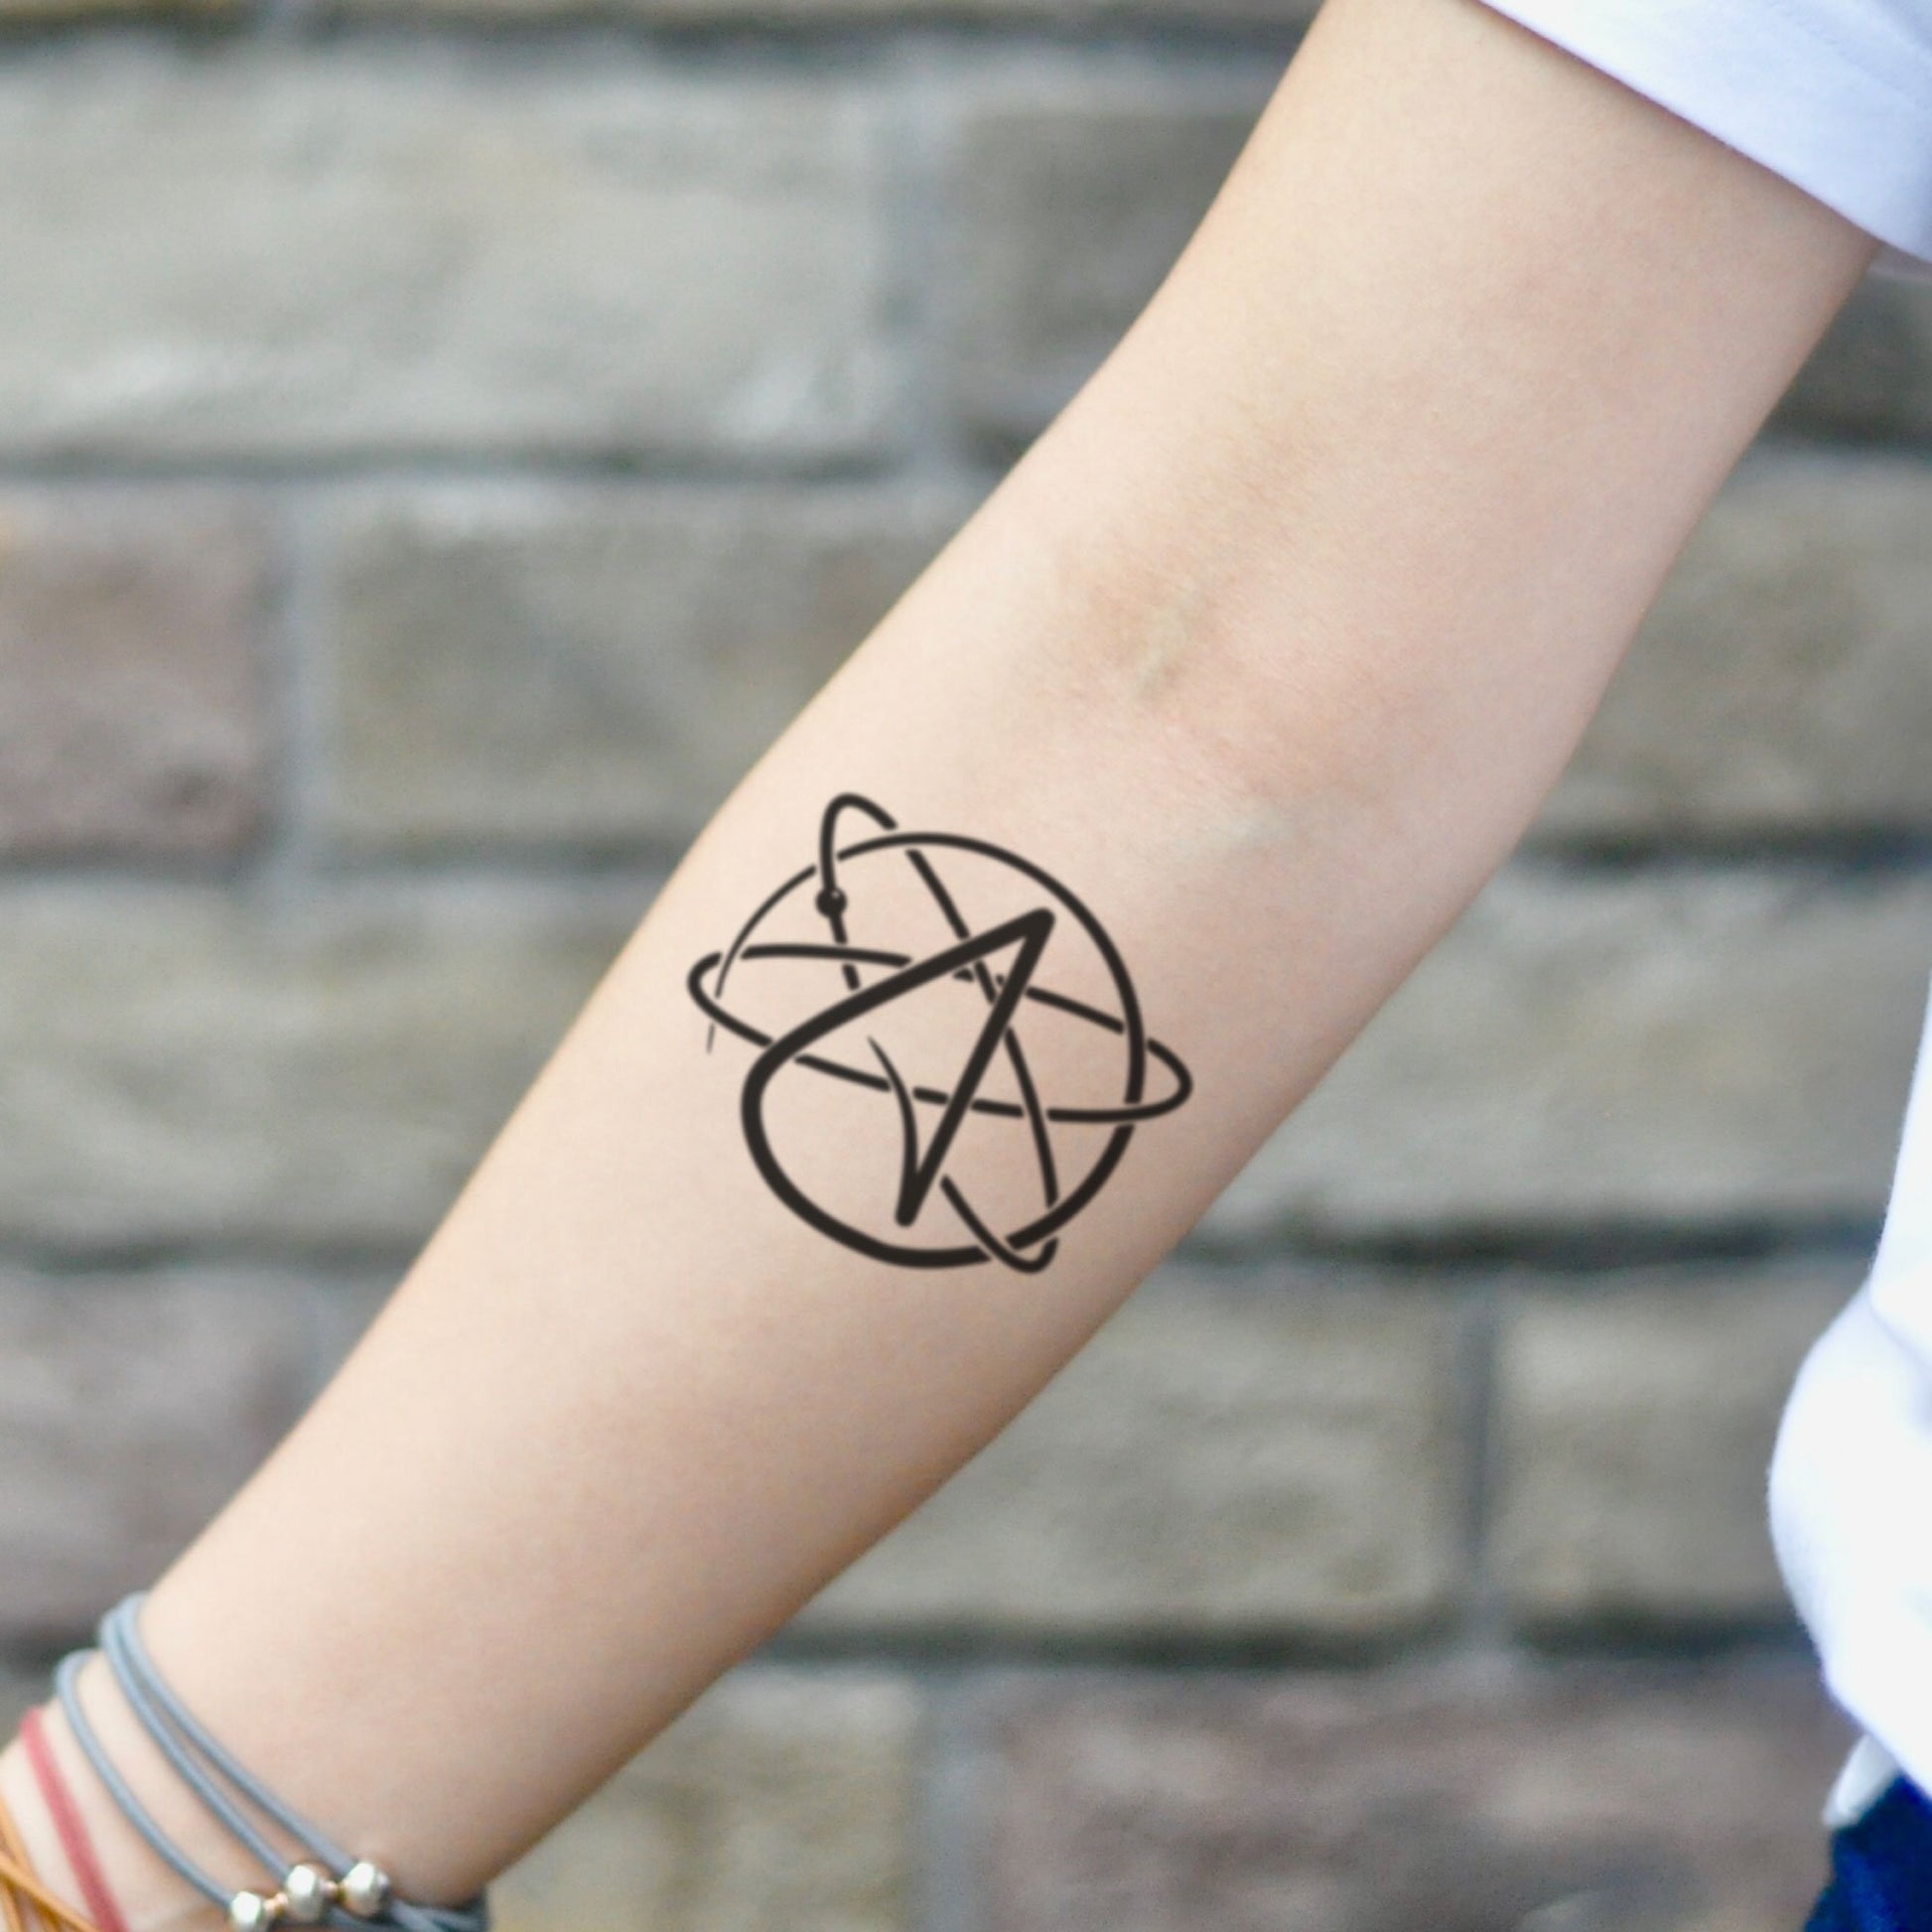 fake small atheist agnostic anti religion geometric temporary tattoo sticker design idea on inner arm